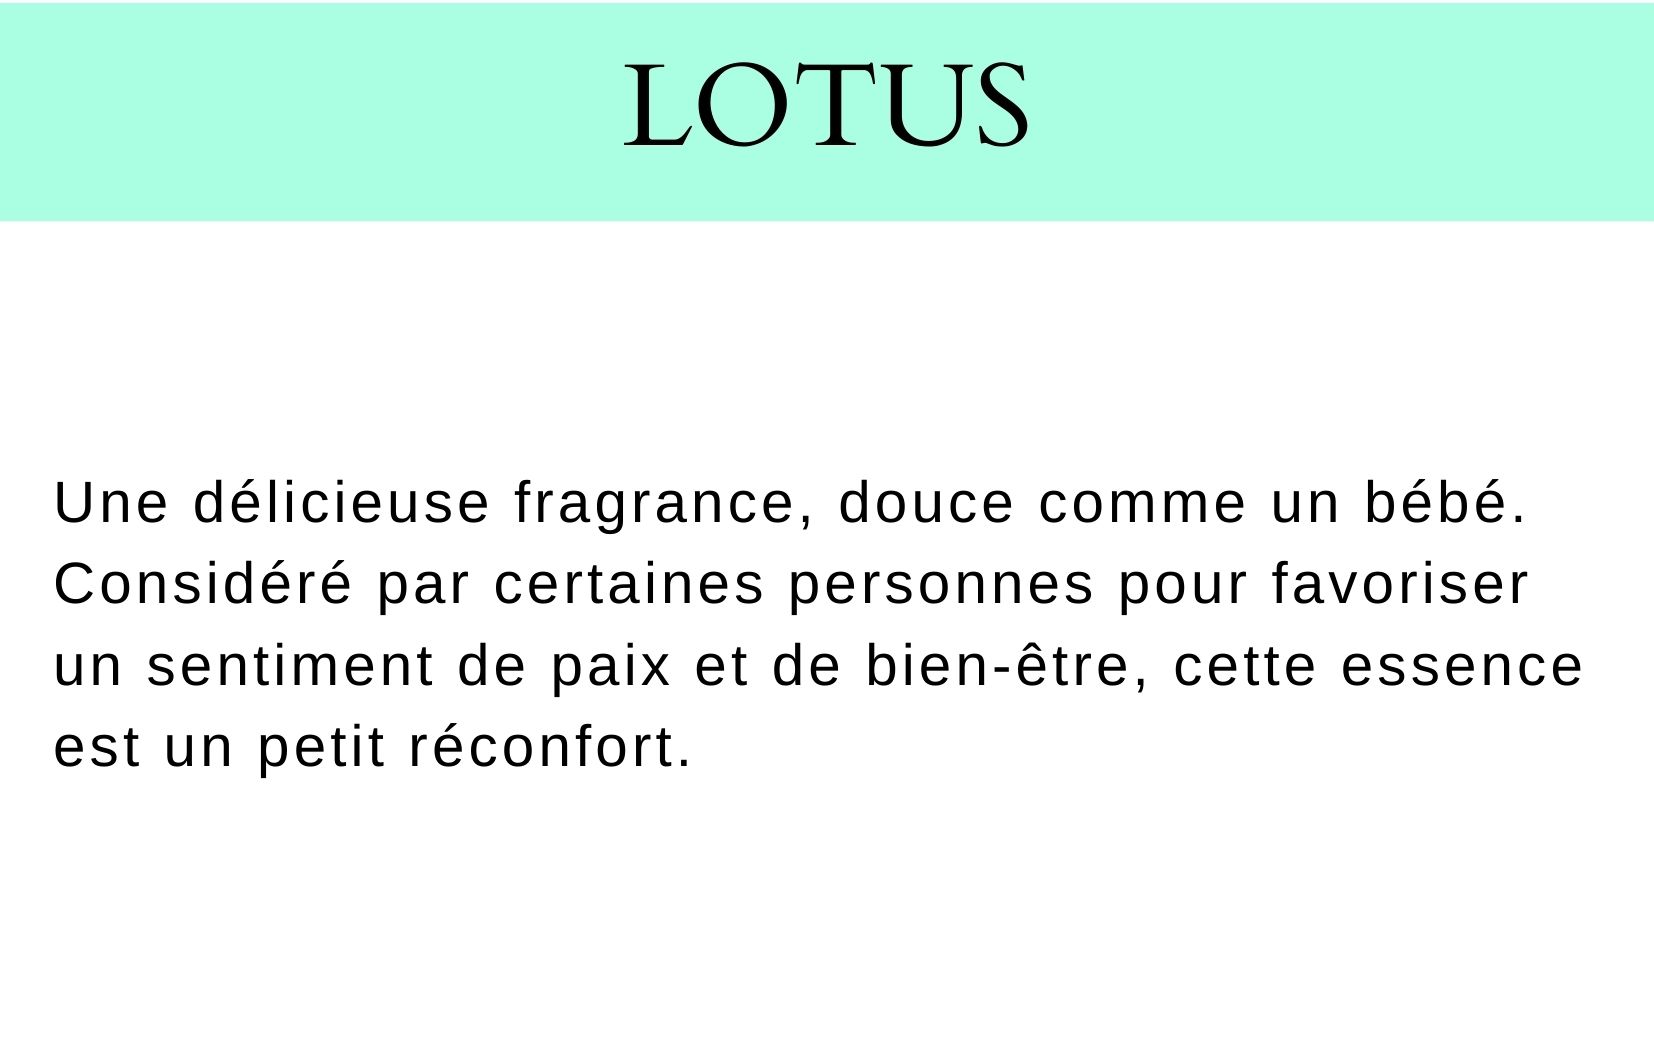 Lotus description